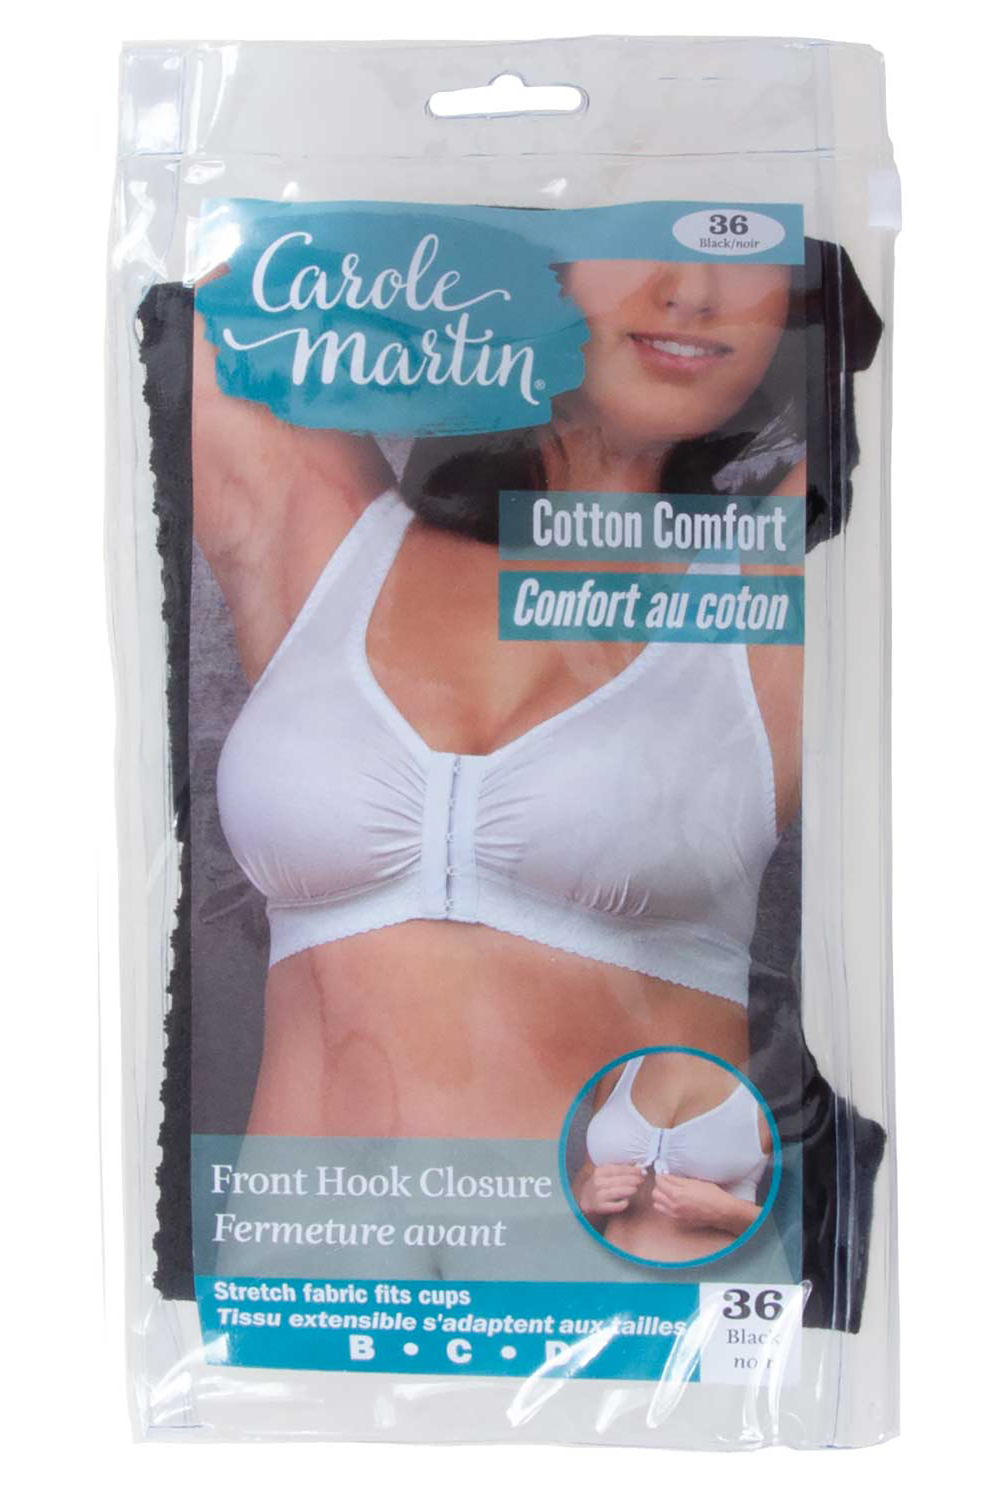 Carole Martin - Cotton Comfort bra, black, 36. Colour: black. Size: 36  b/c/d/dd